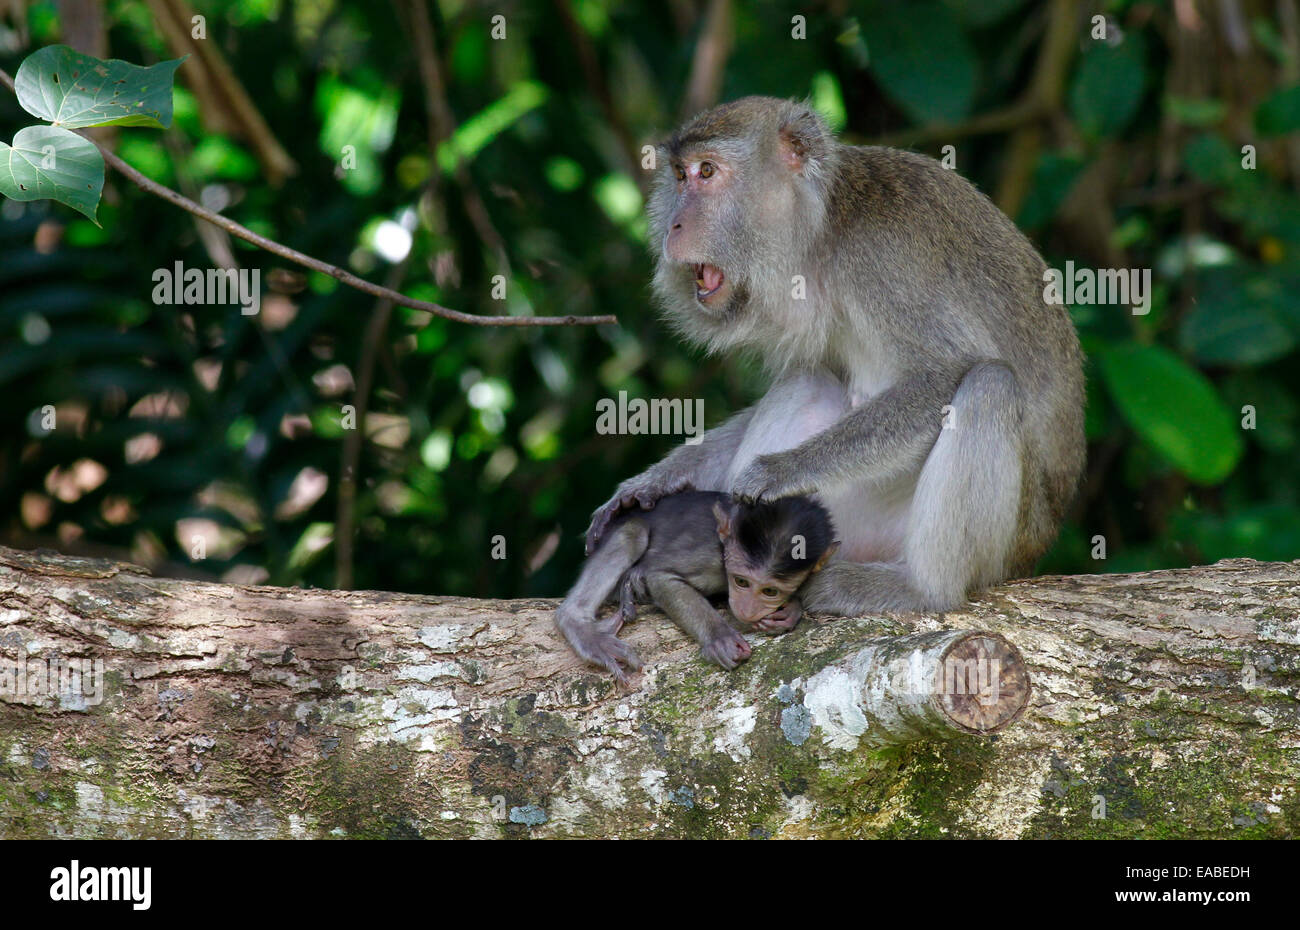 Manger du crabe - Macaca fascicularis macaque - mère avec bébé, parc national de Bako, Sarawak, Malaisie Banque D'Images